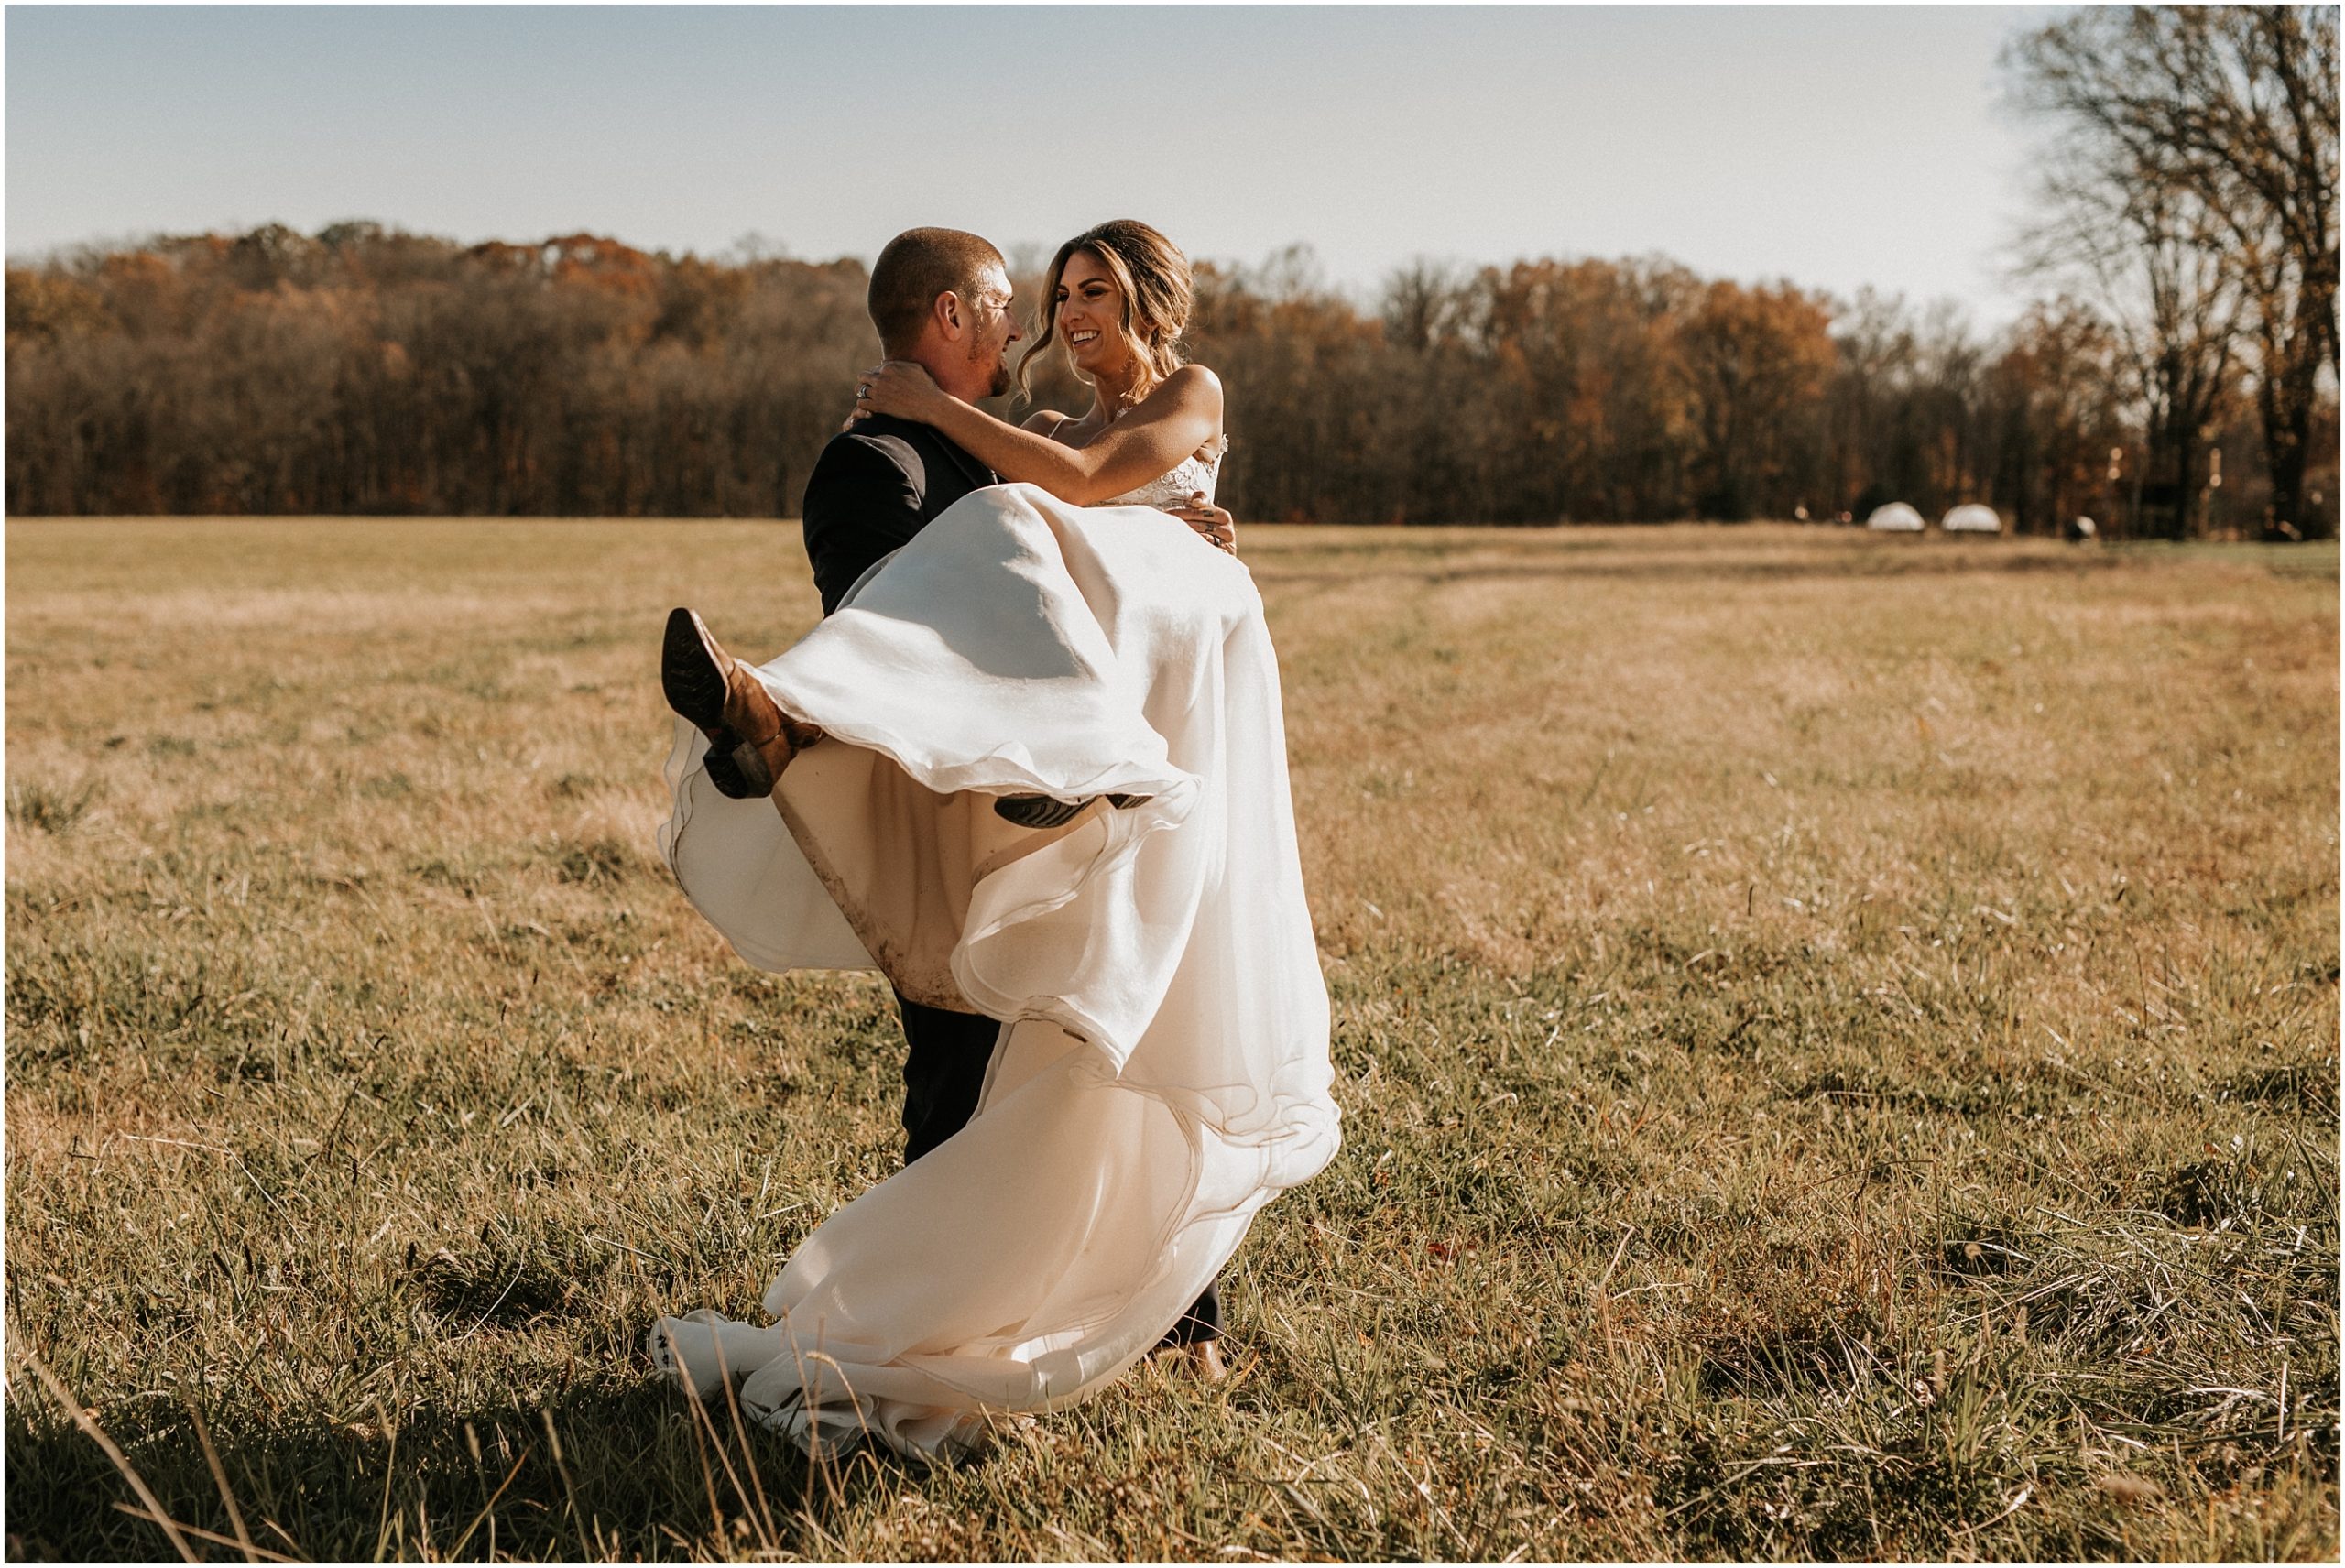 Tori Kelner Photography Engagement Sessions & Weddings